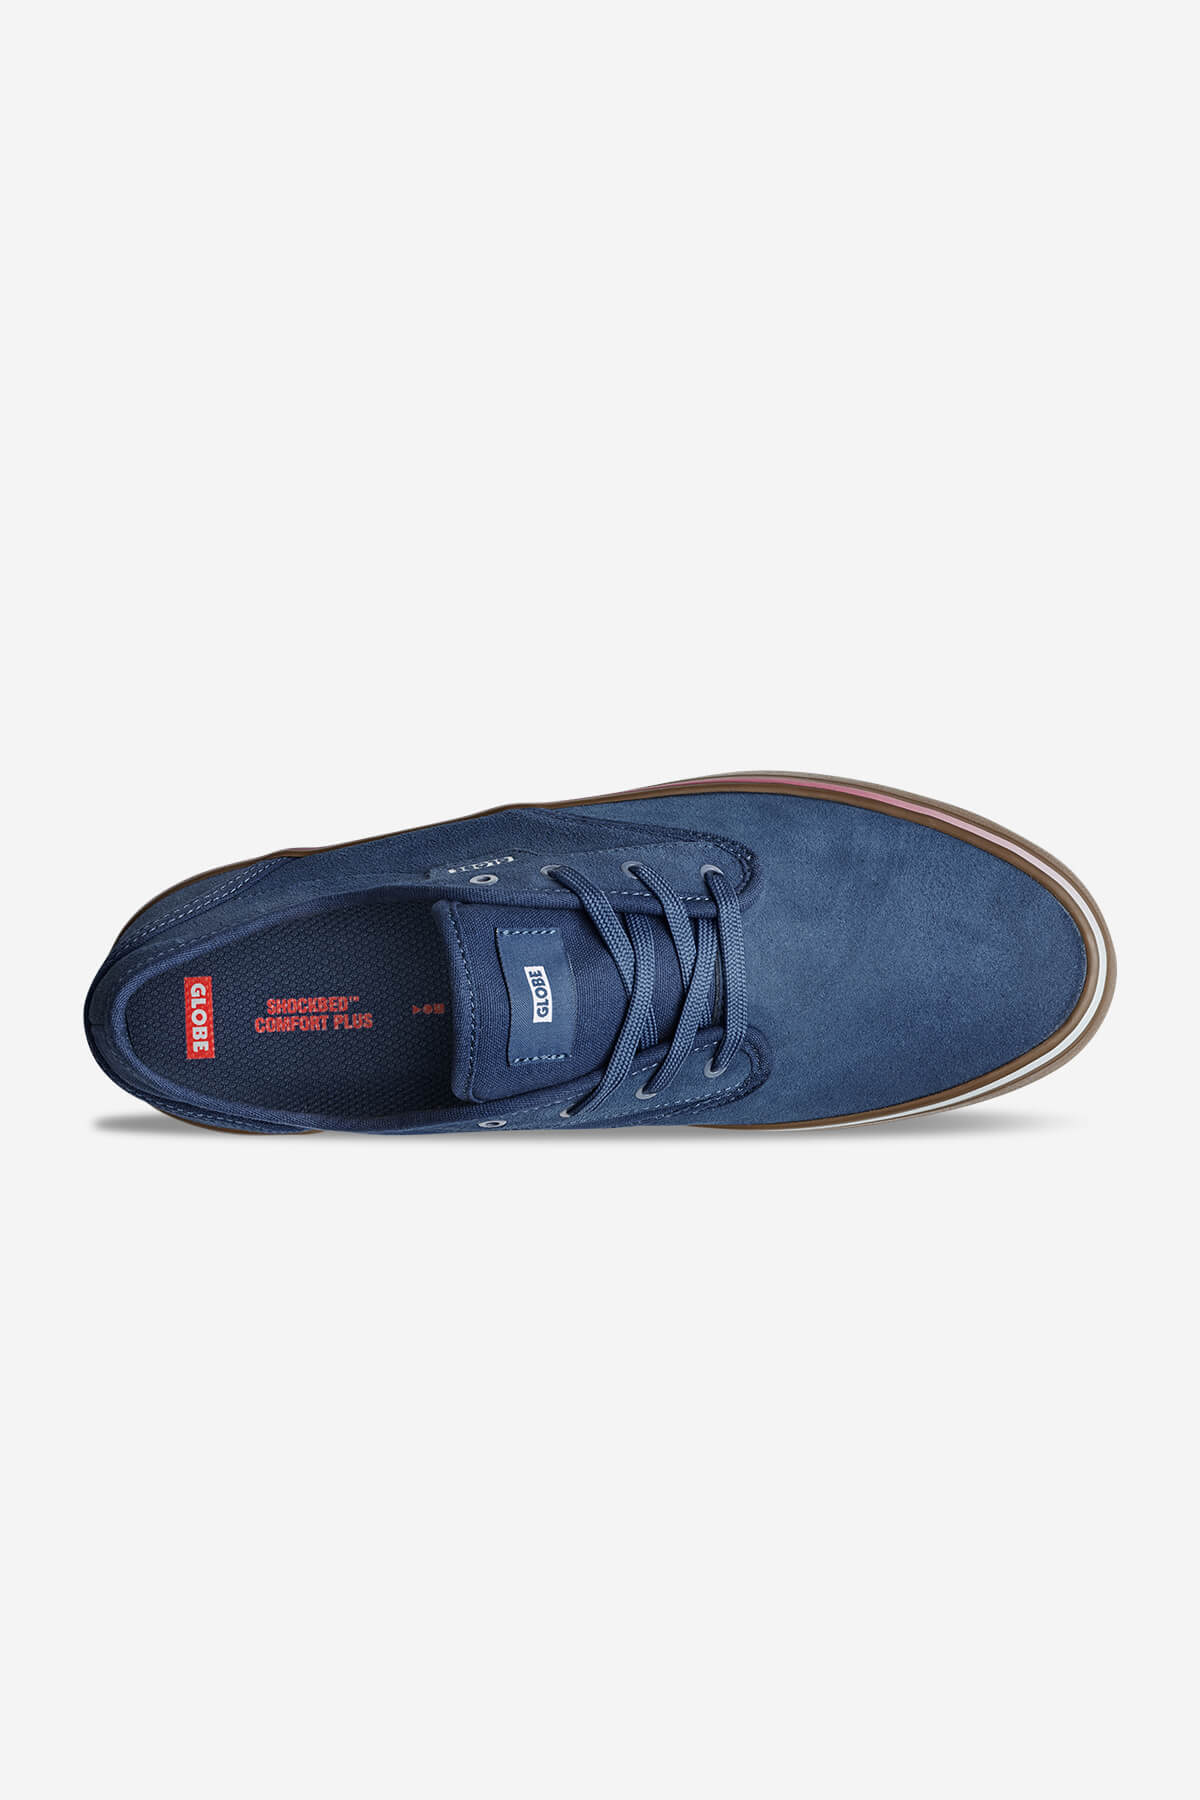 motley ii blue gum skateboard chaussures